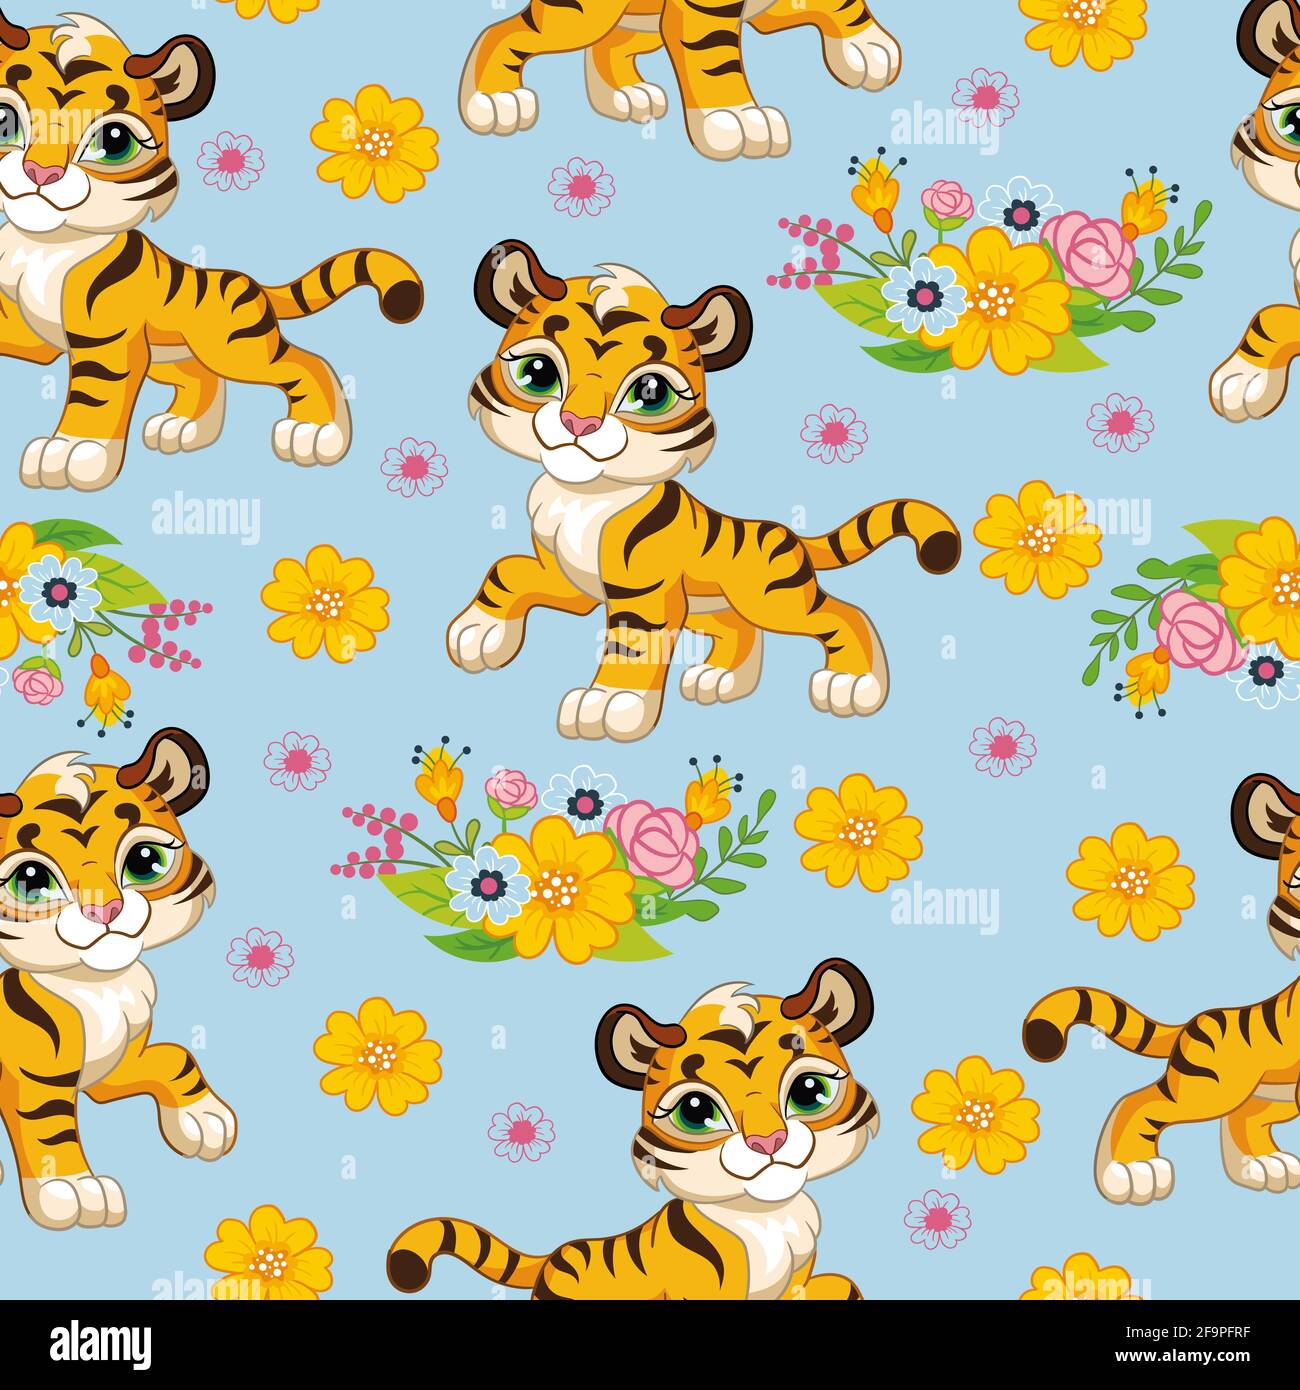 tiger cartoon background